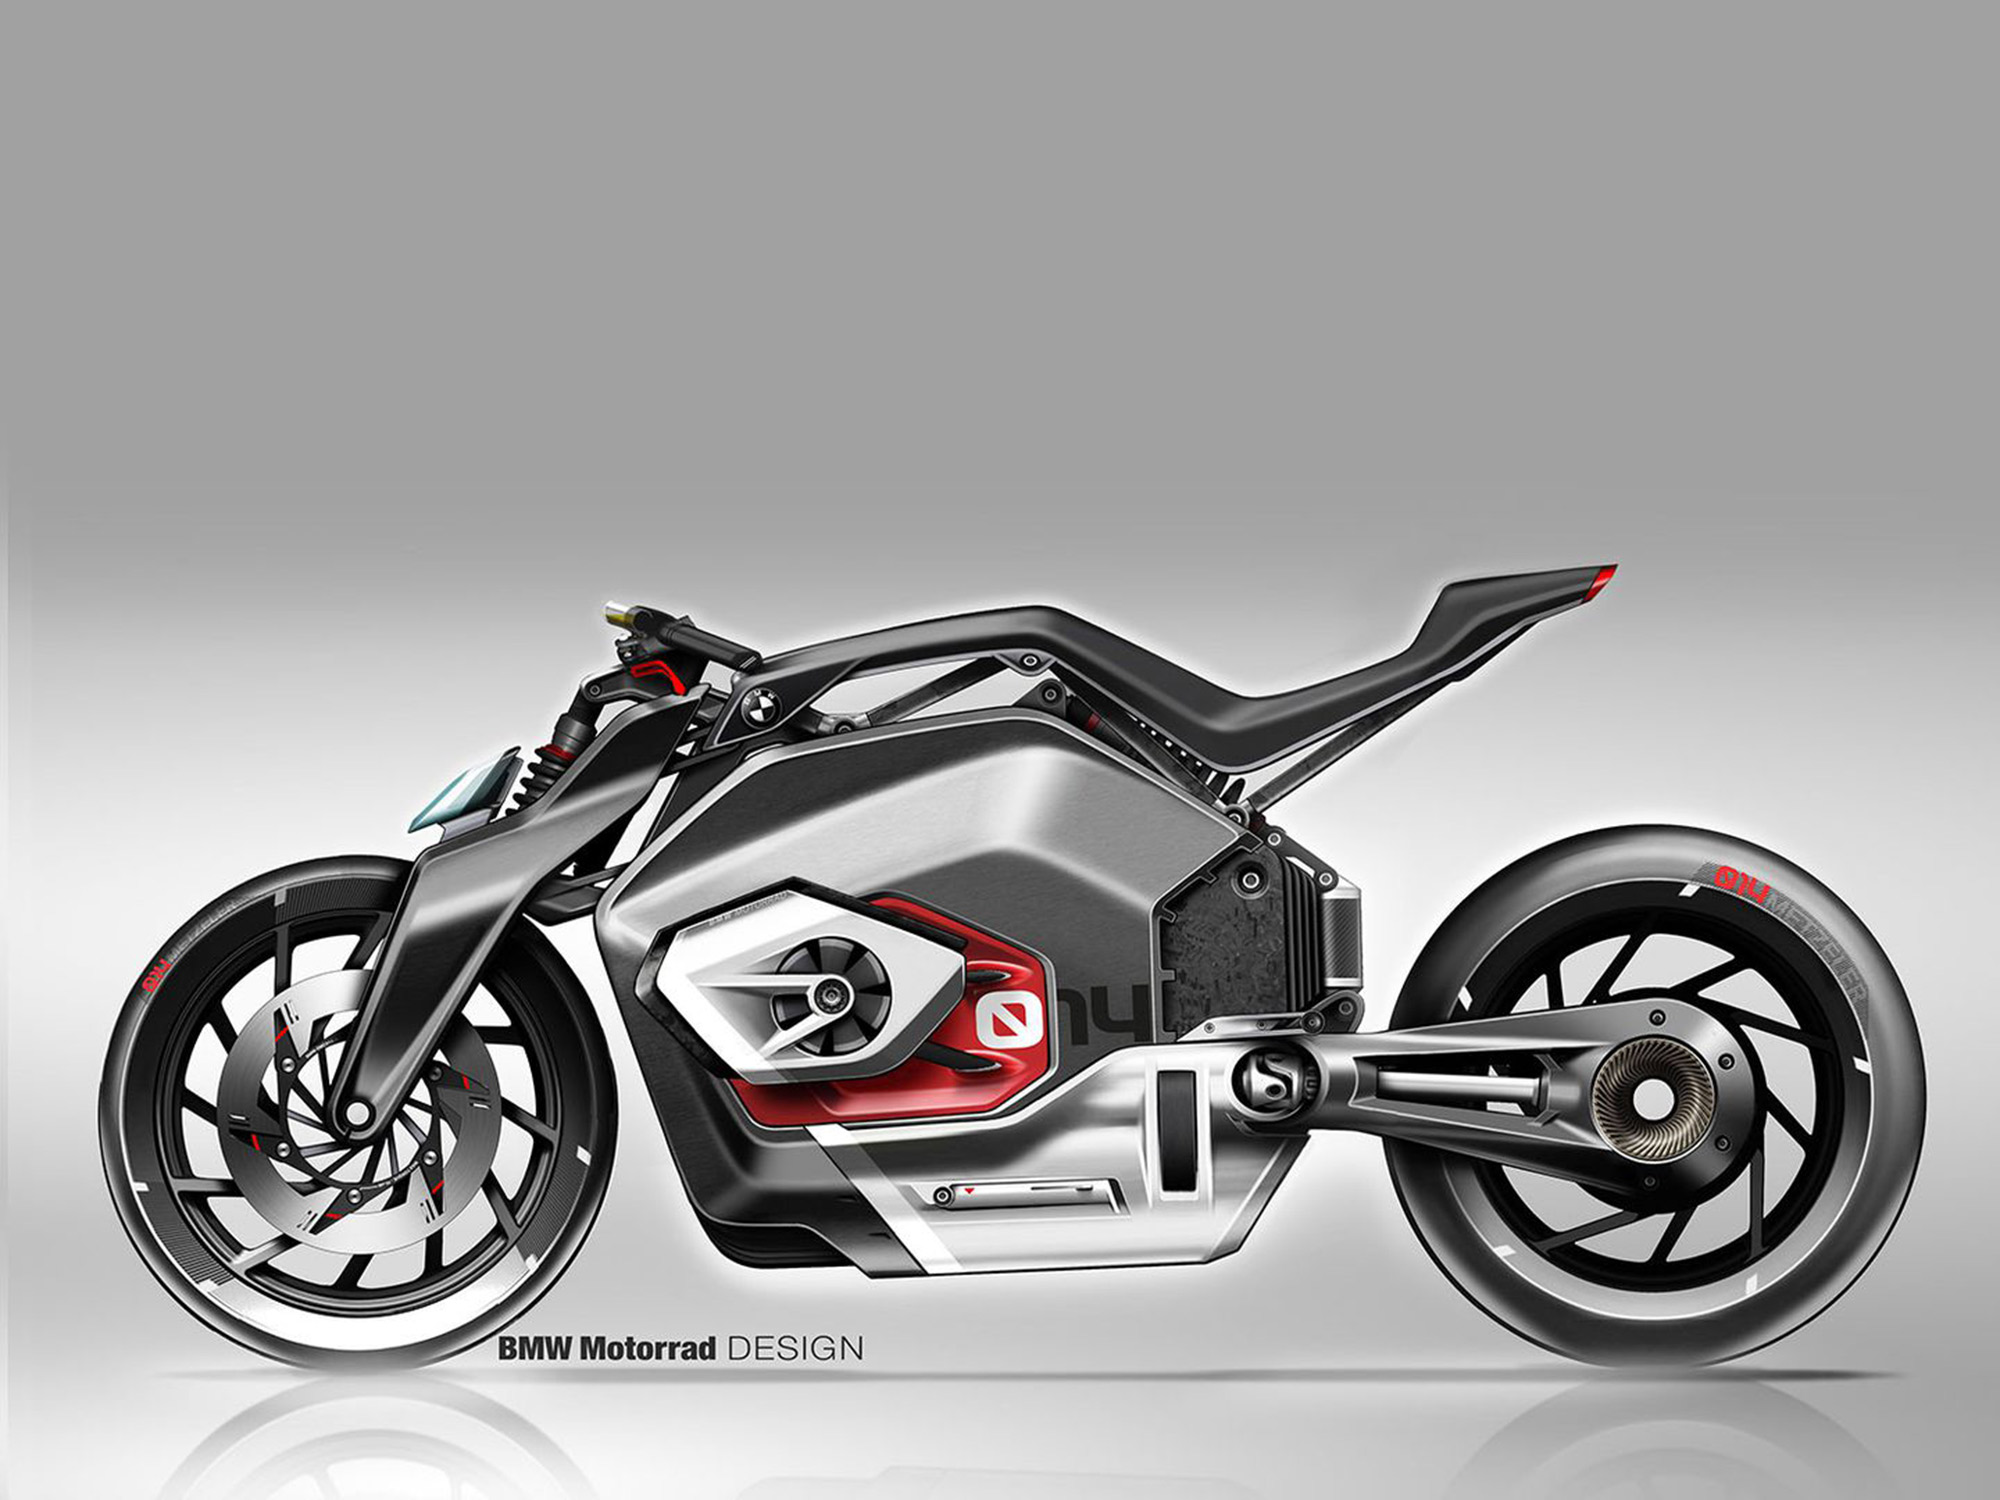 Bmw S Latest Electric Bike Patent Has A New Twist Cycle World